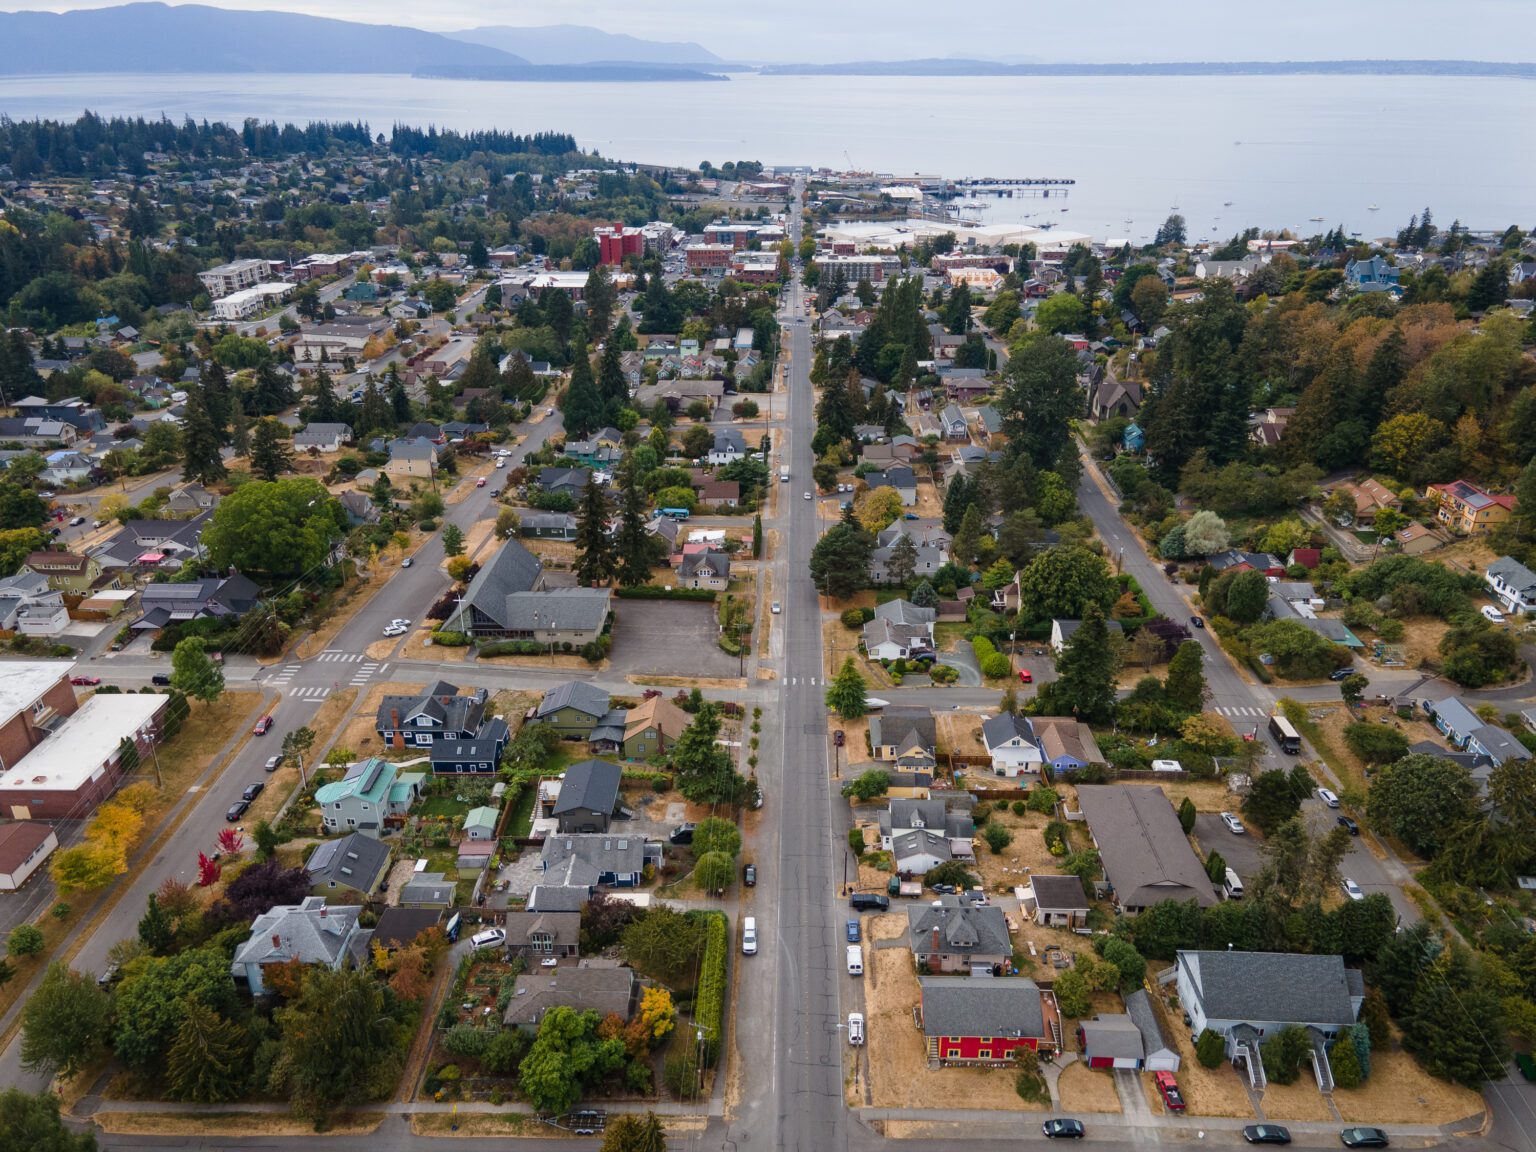 An aerial view of residential neighbourhoods near downtown Bellingham.